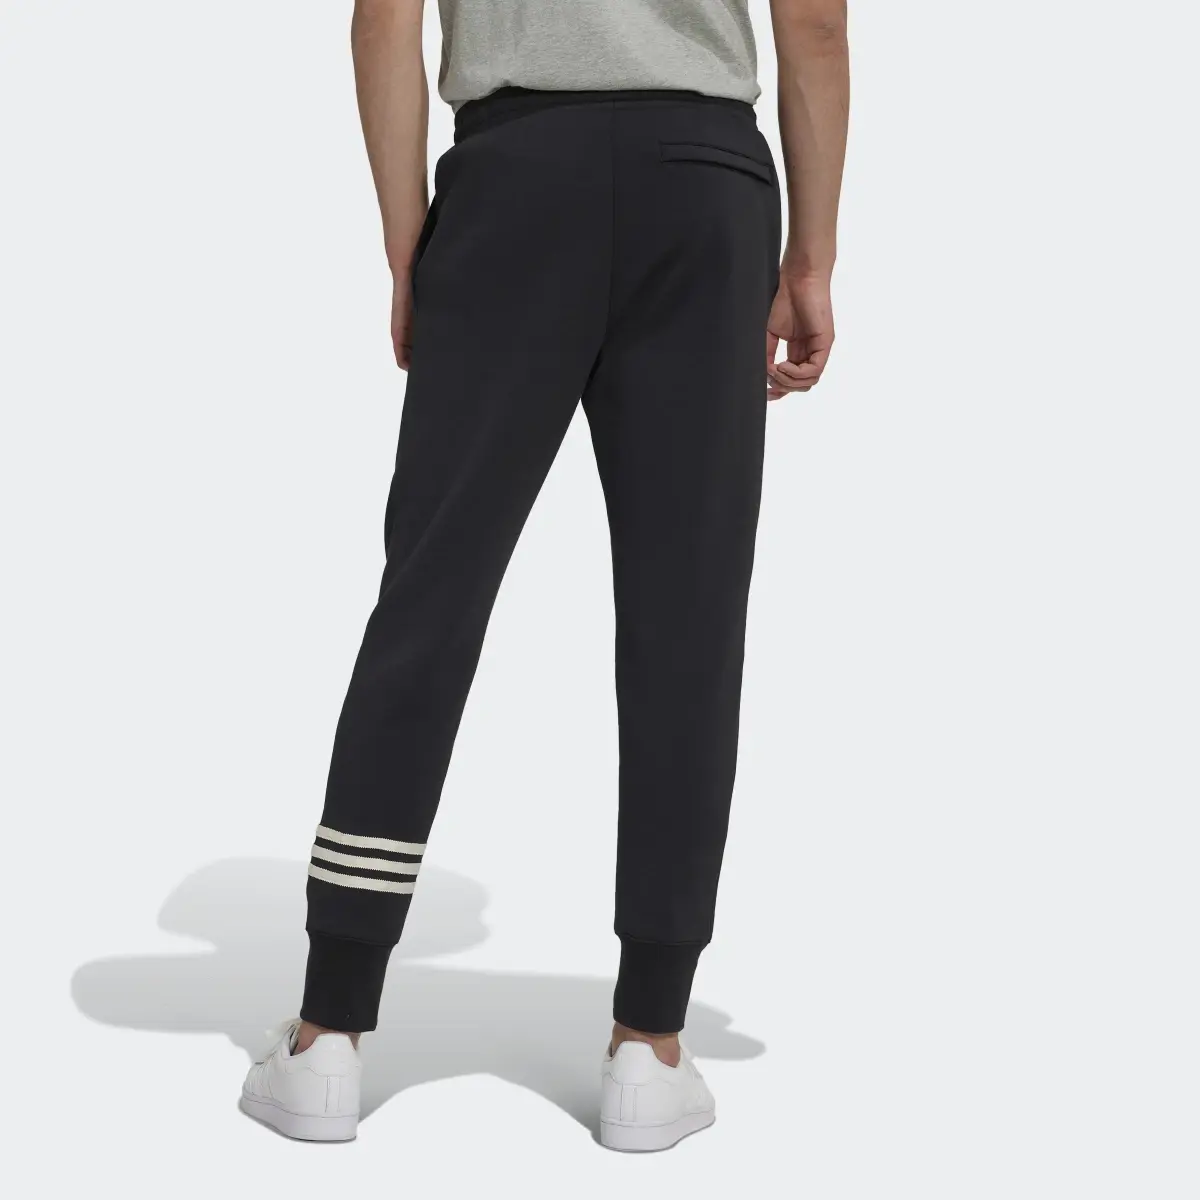 Adidas Adicolor Neuclassics SweatTracksuit Bottoms. 2